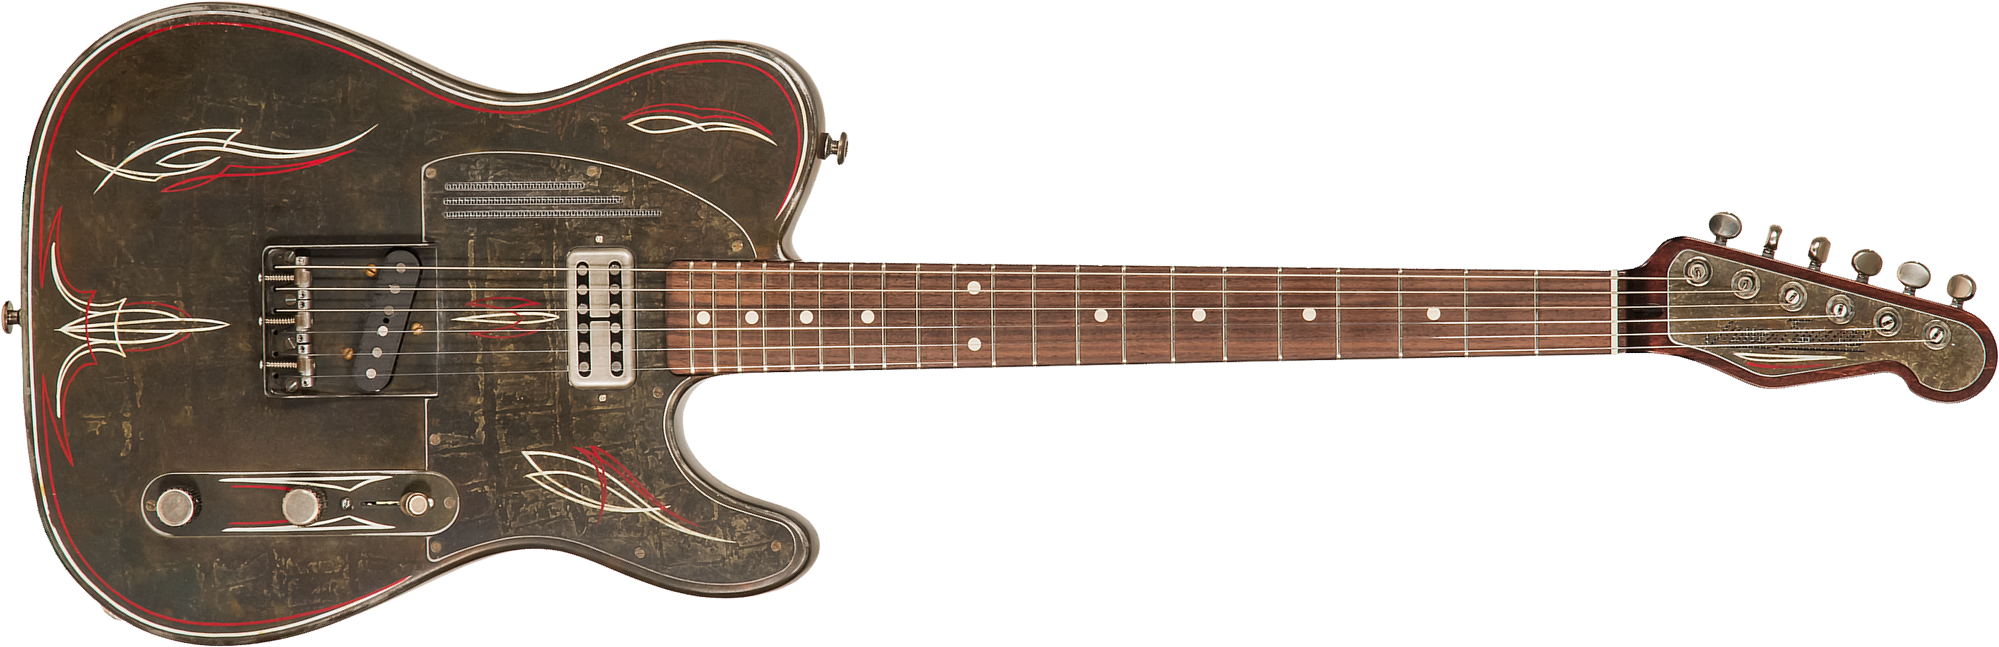 James Trussart Steelcaster Perf.back Sh Tv Jones Ht Rw #21167 - Rust O Matic Pinstriped - Guitarra eléctrica con forma de tel - Main picture